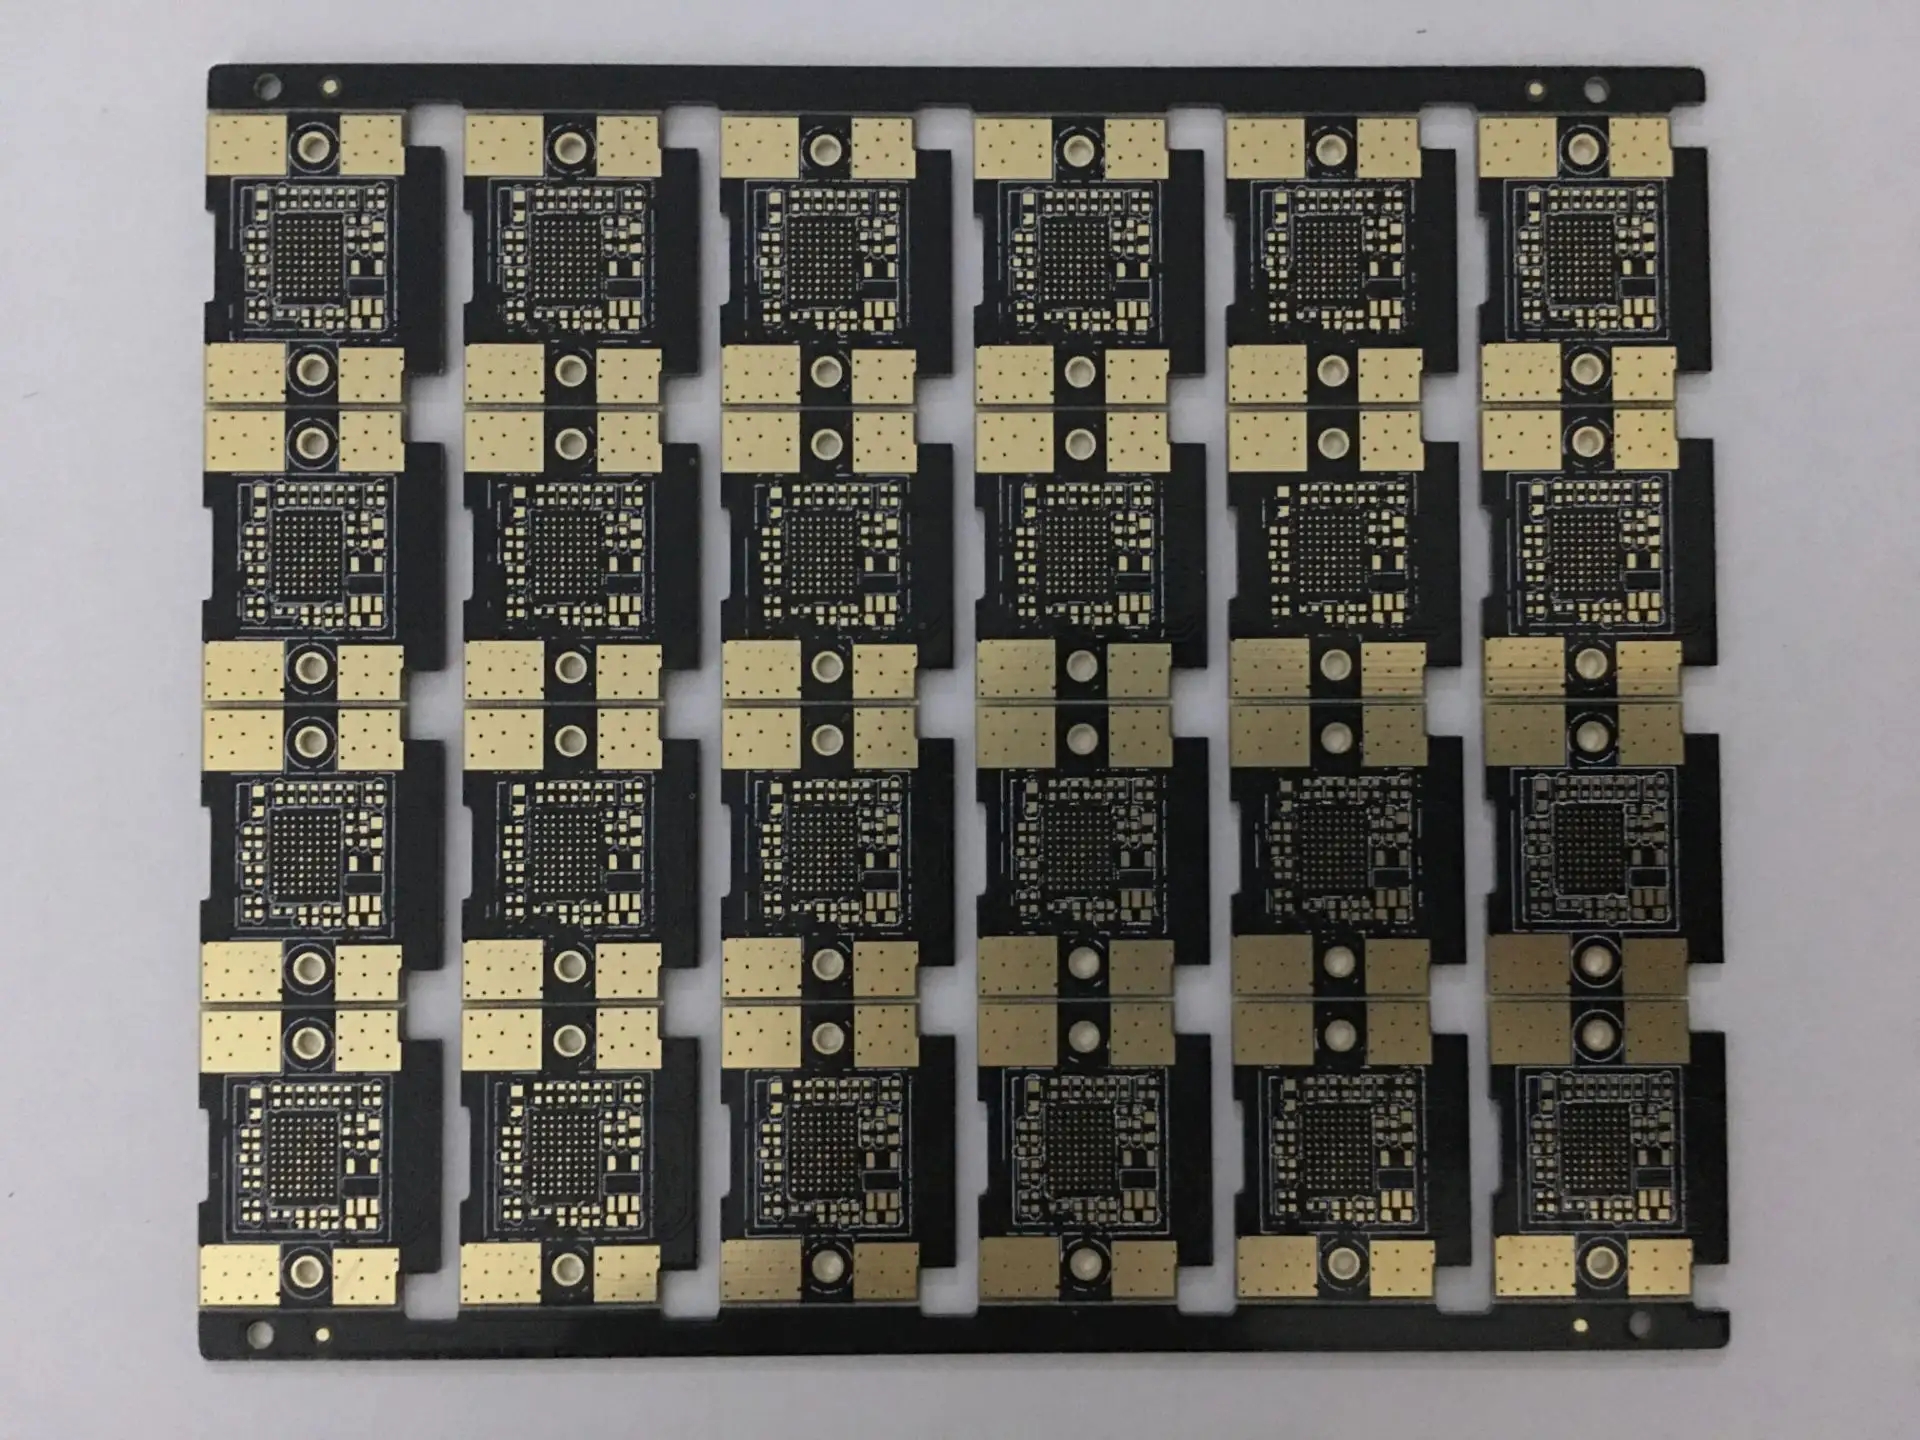 PCB printed boards